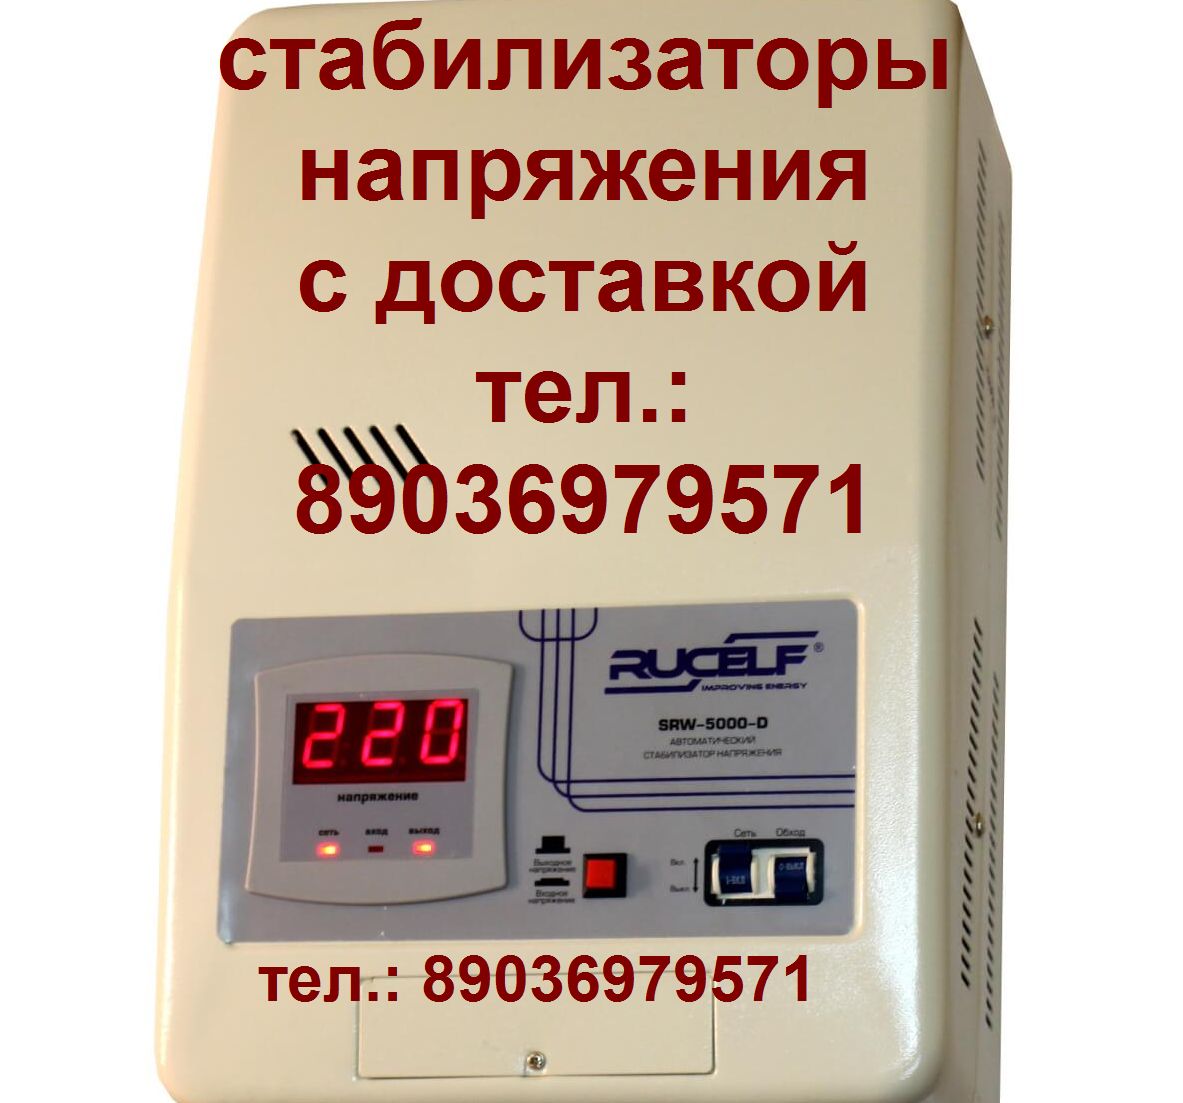 пассики для sharp vz-3000 vz-3500 rp-10 rp-113 rp-101 rp-25 rp-11 rp23 пассики для sharp vz-3000 vz-3500 rp-10 rp-113 rp-101 rp-25 rp-11 rp23 в городе Москва, фото 2, Прочая аудиотехника